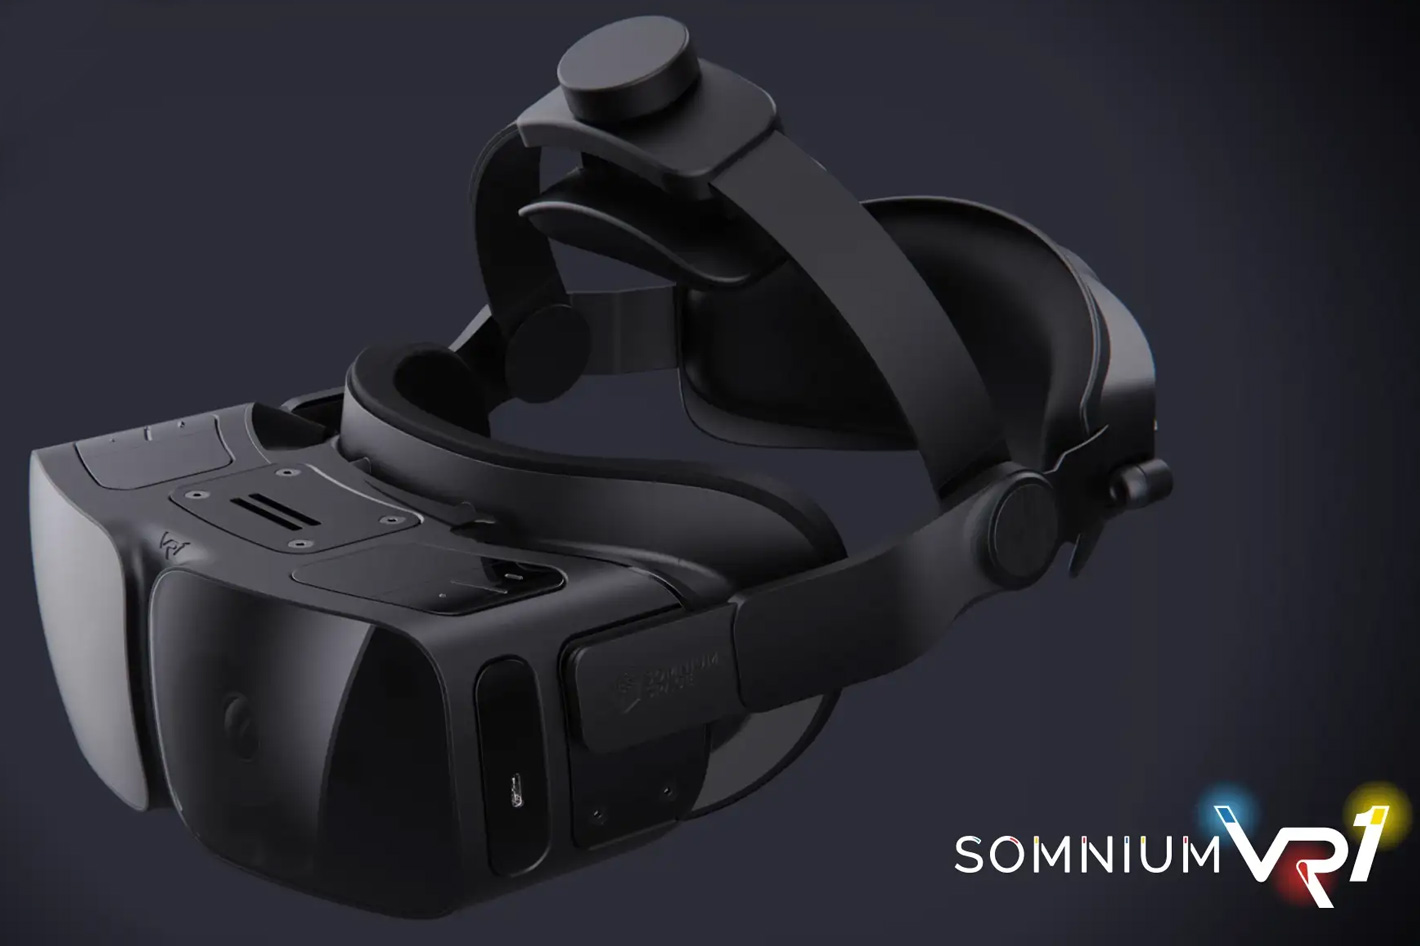 Somnium VR1 Headset DevKit debuts at CES 2023